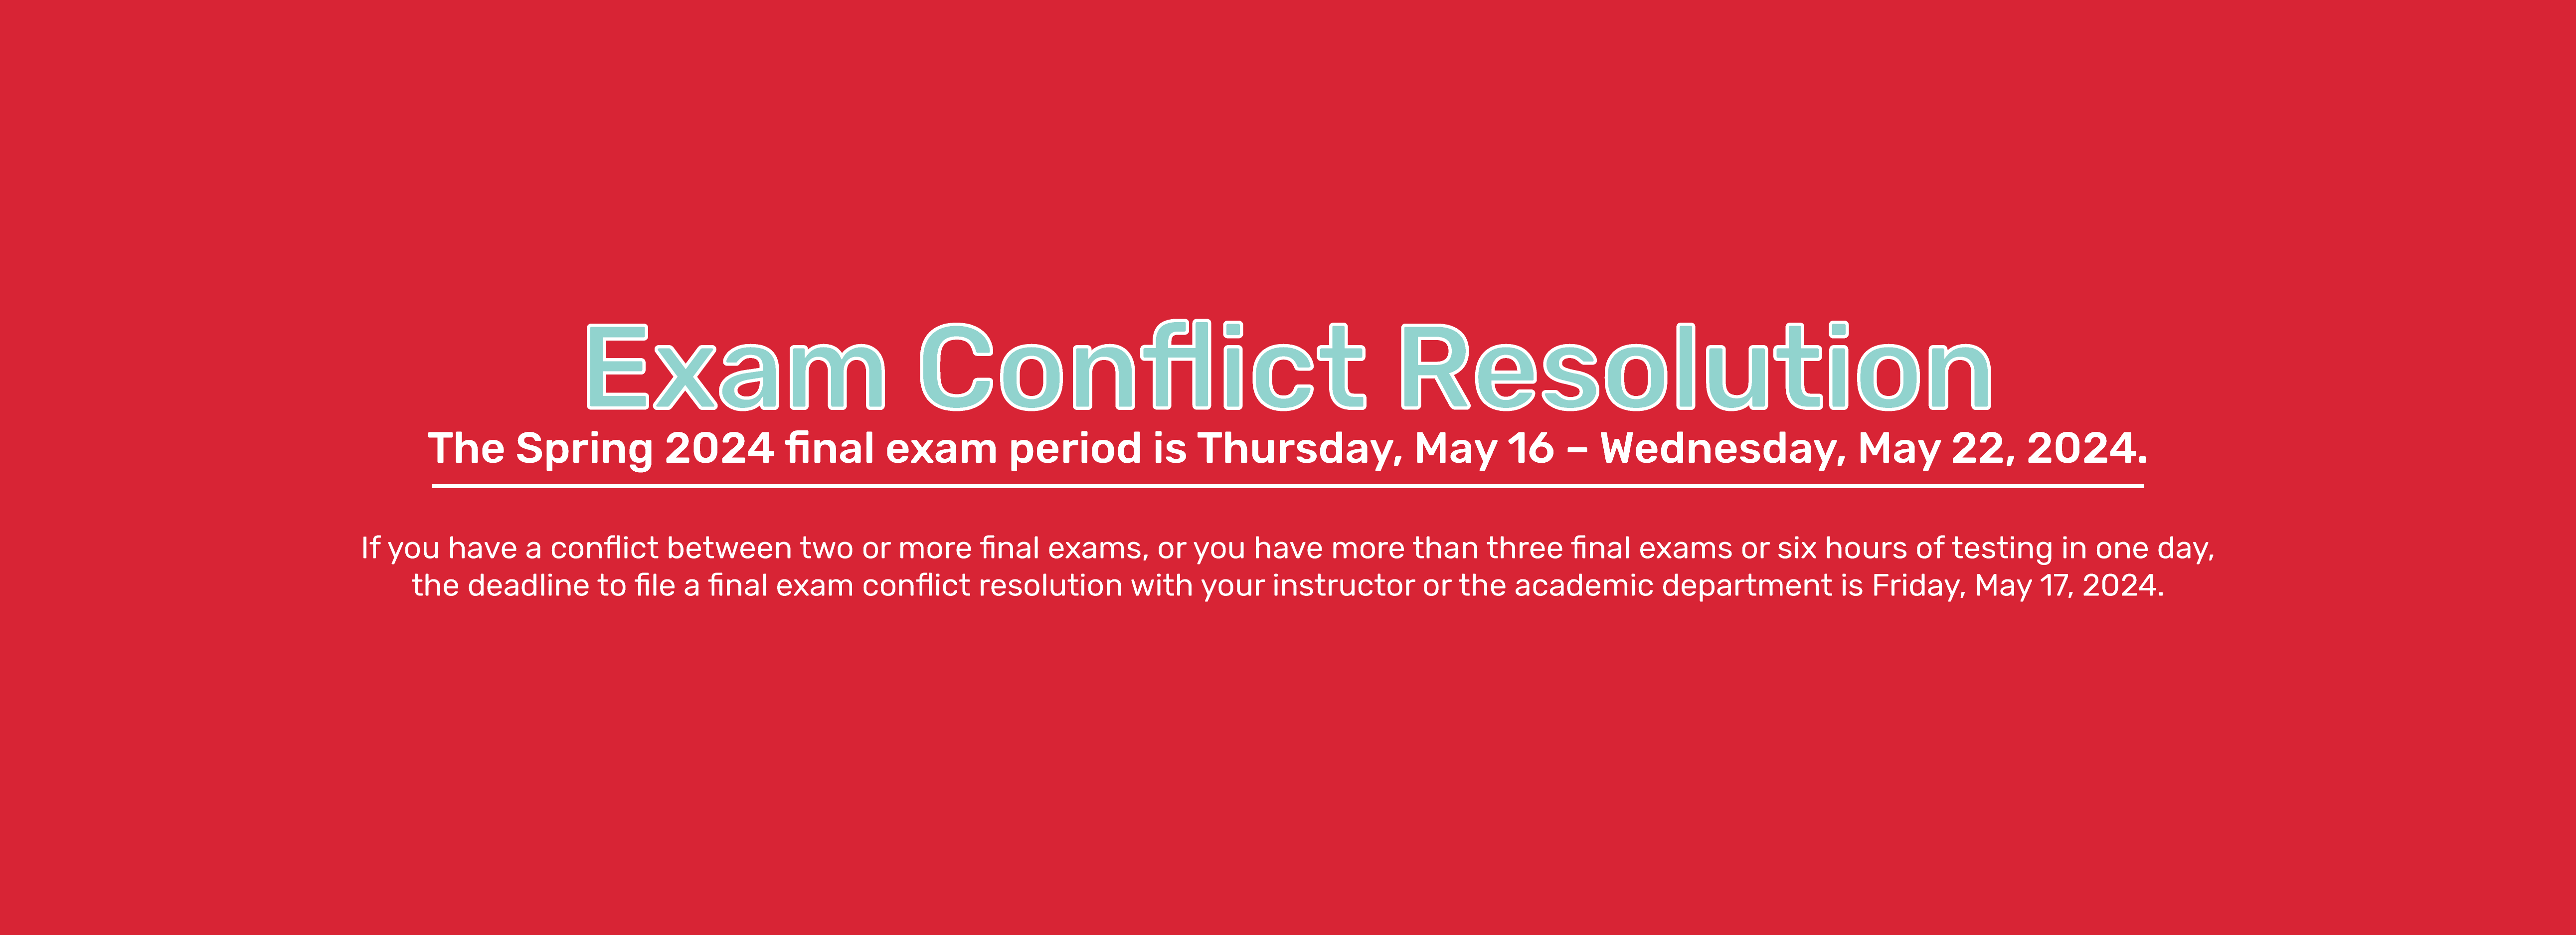 Exam Conflict Resolution